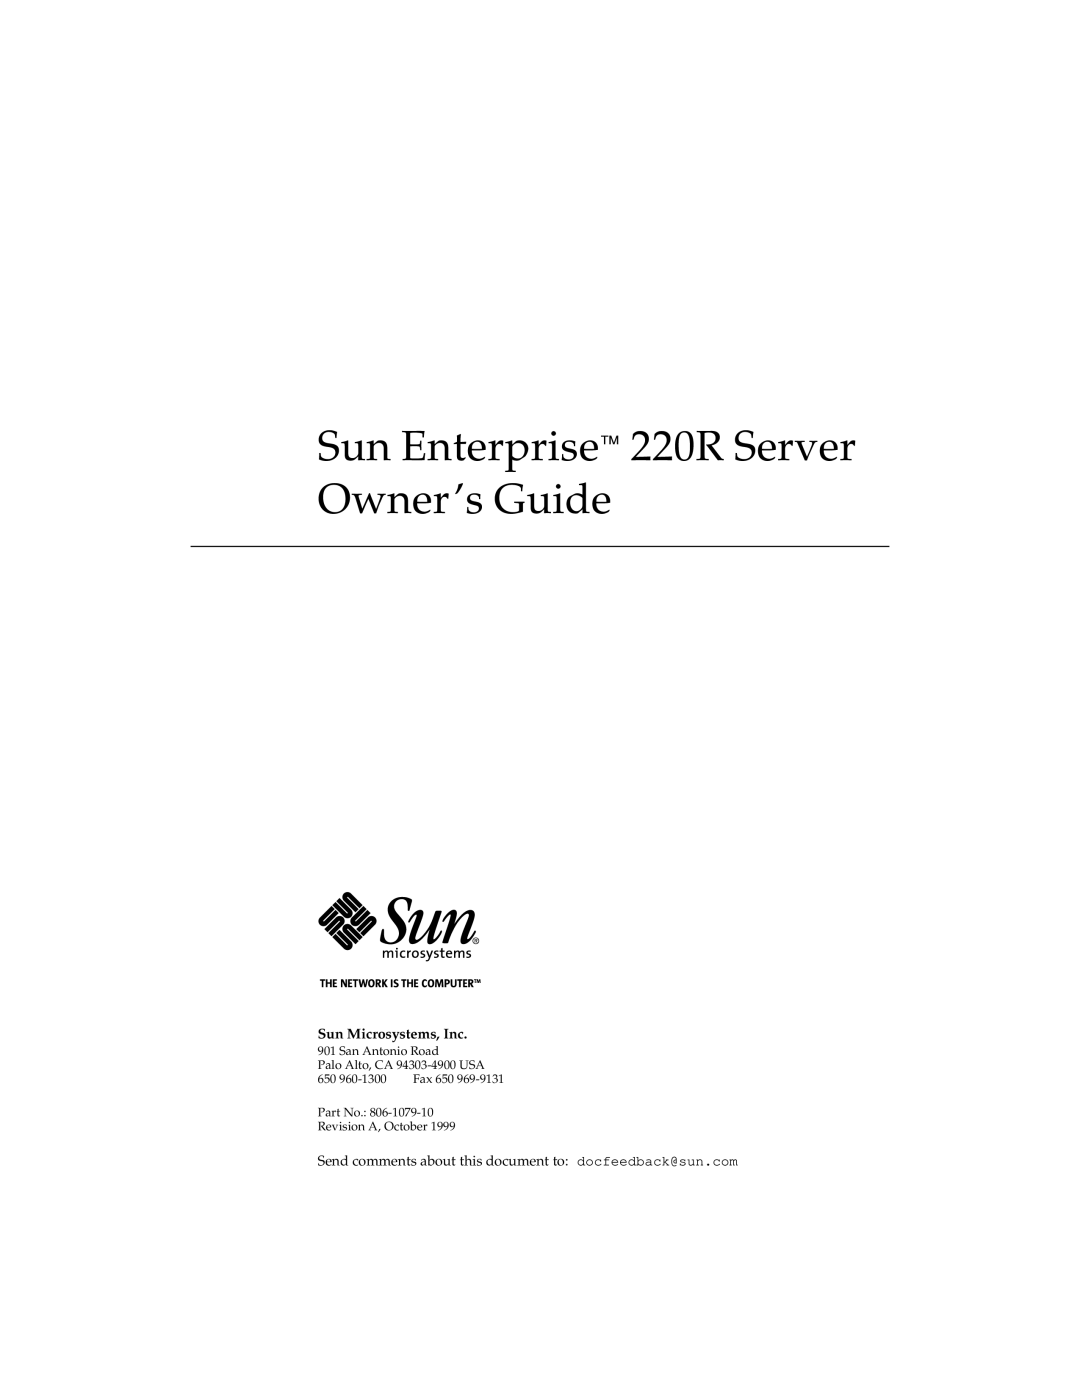 Sun Microsystems manual Sun Enterprise 220R Server Owner’s Guide, Sun Microsystems, Inc 